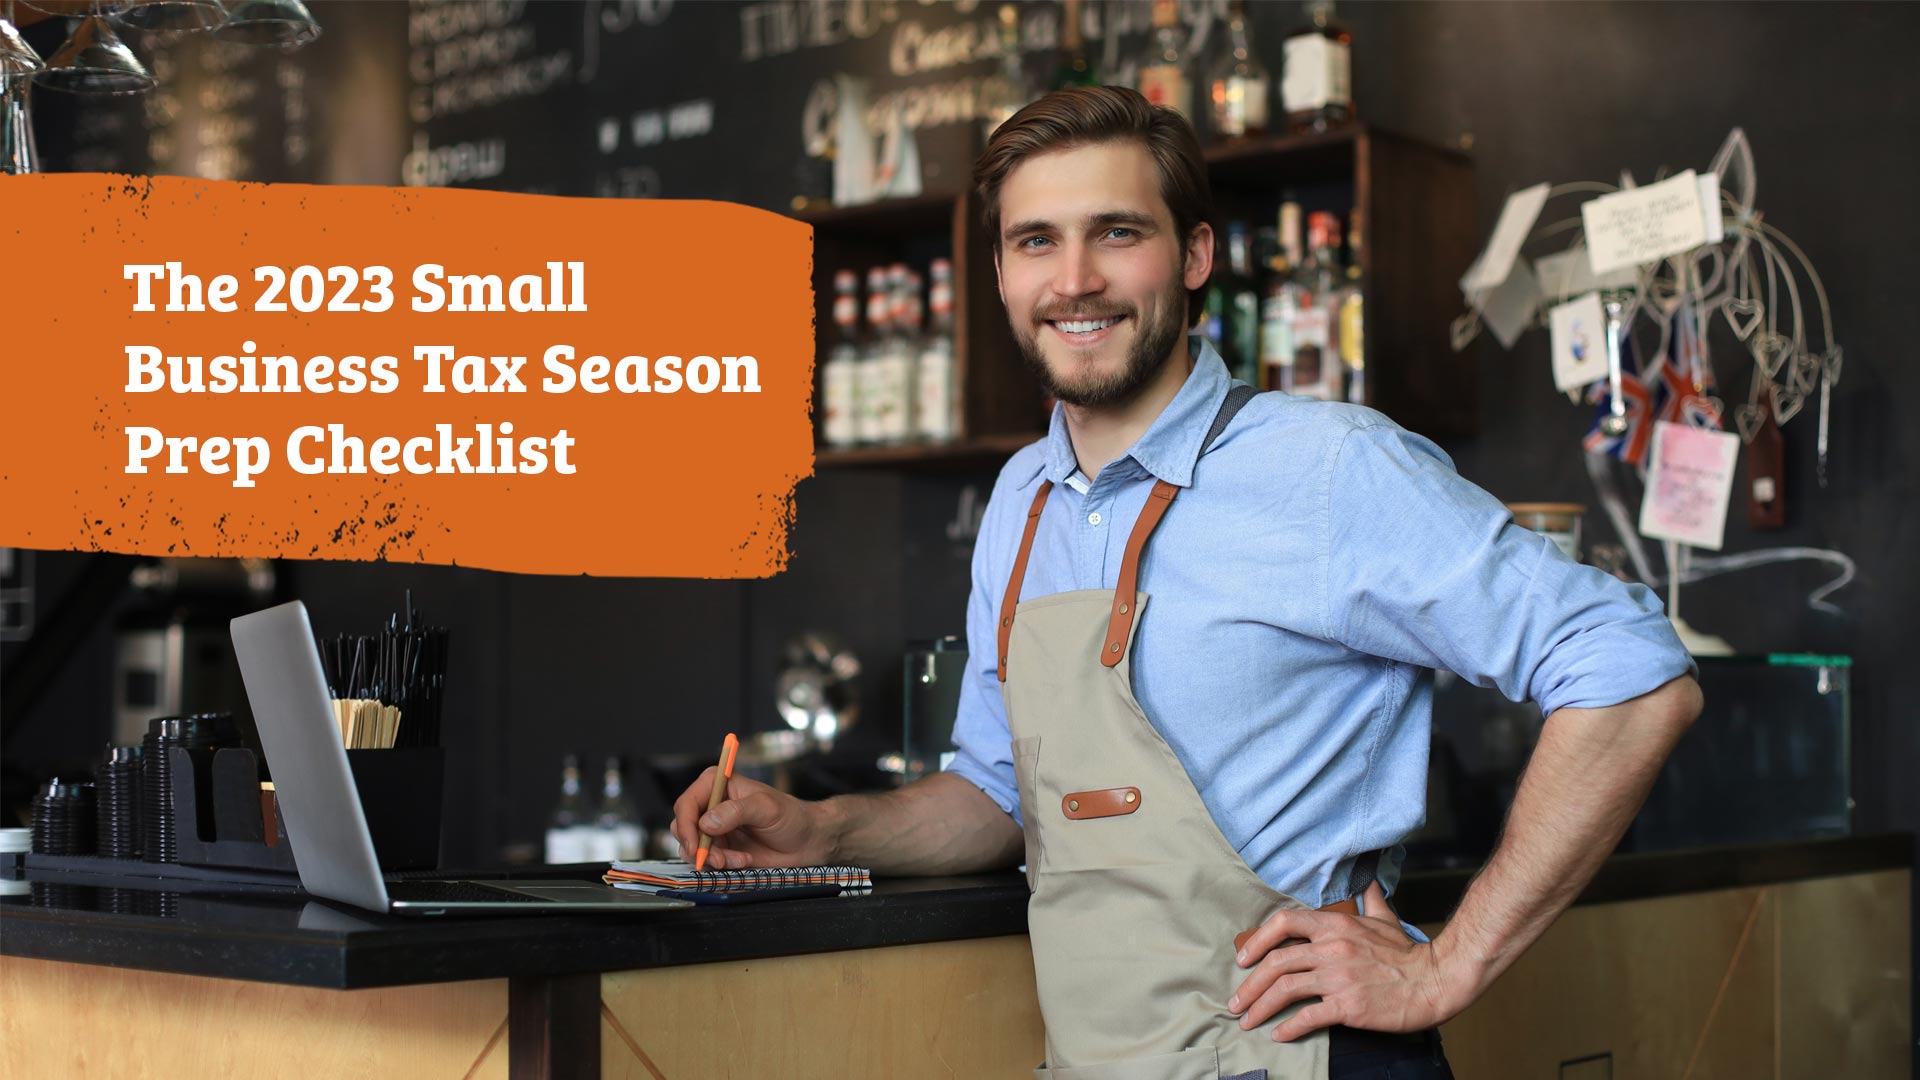 The 2023 Small Business Tax Season Prep Checklist